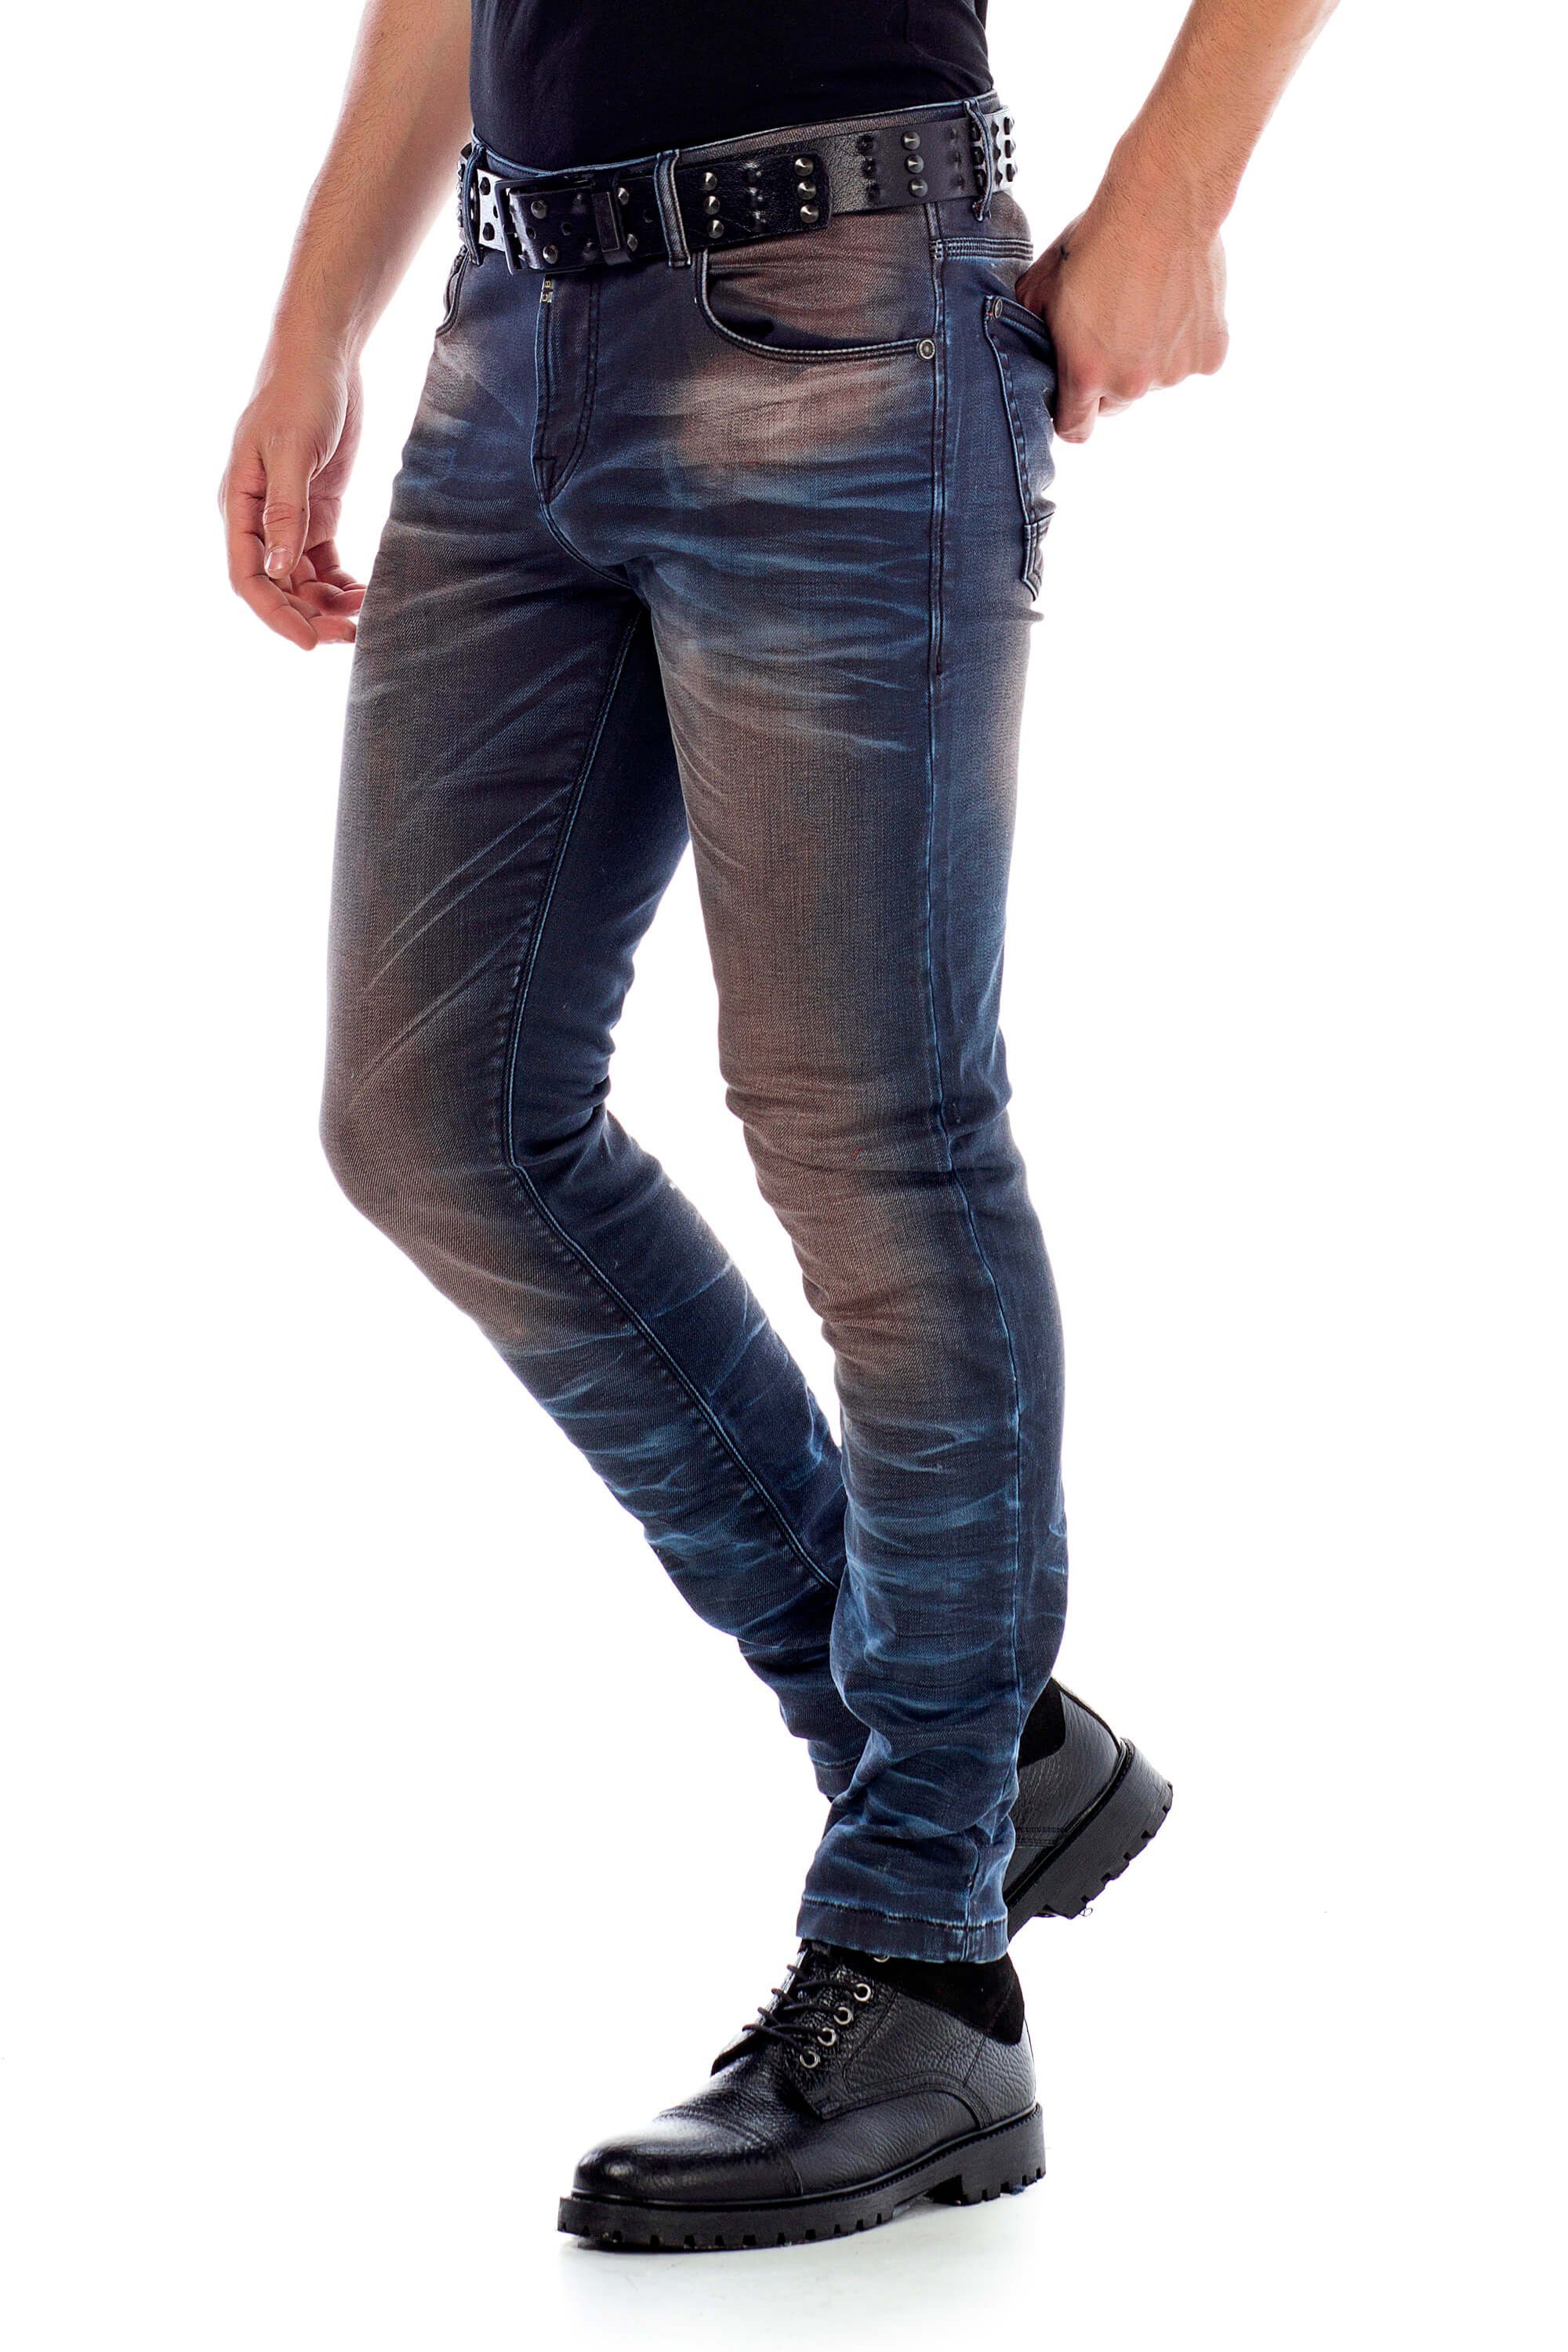 Style in Slim-fit-Jeans Straight im 5-Pocket Cipo Fit & braun Baxx